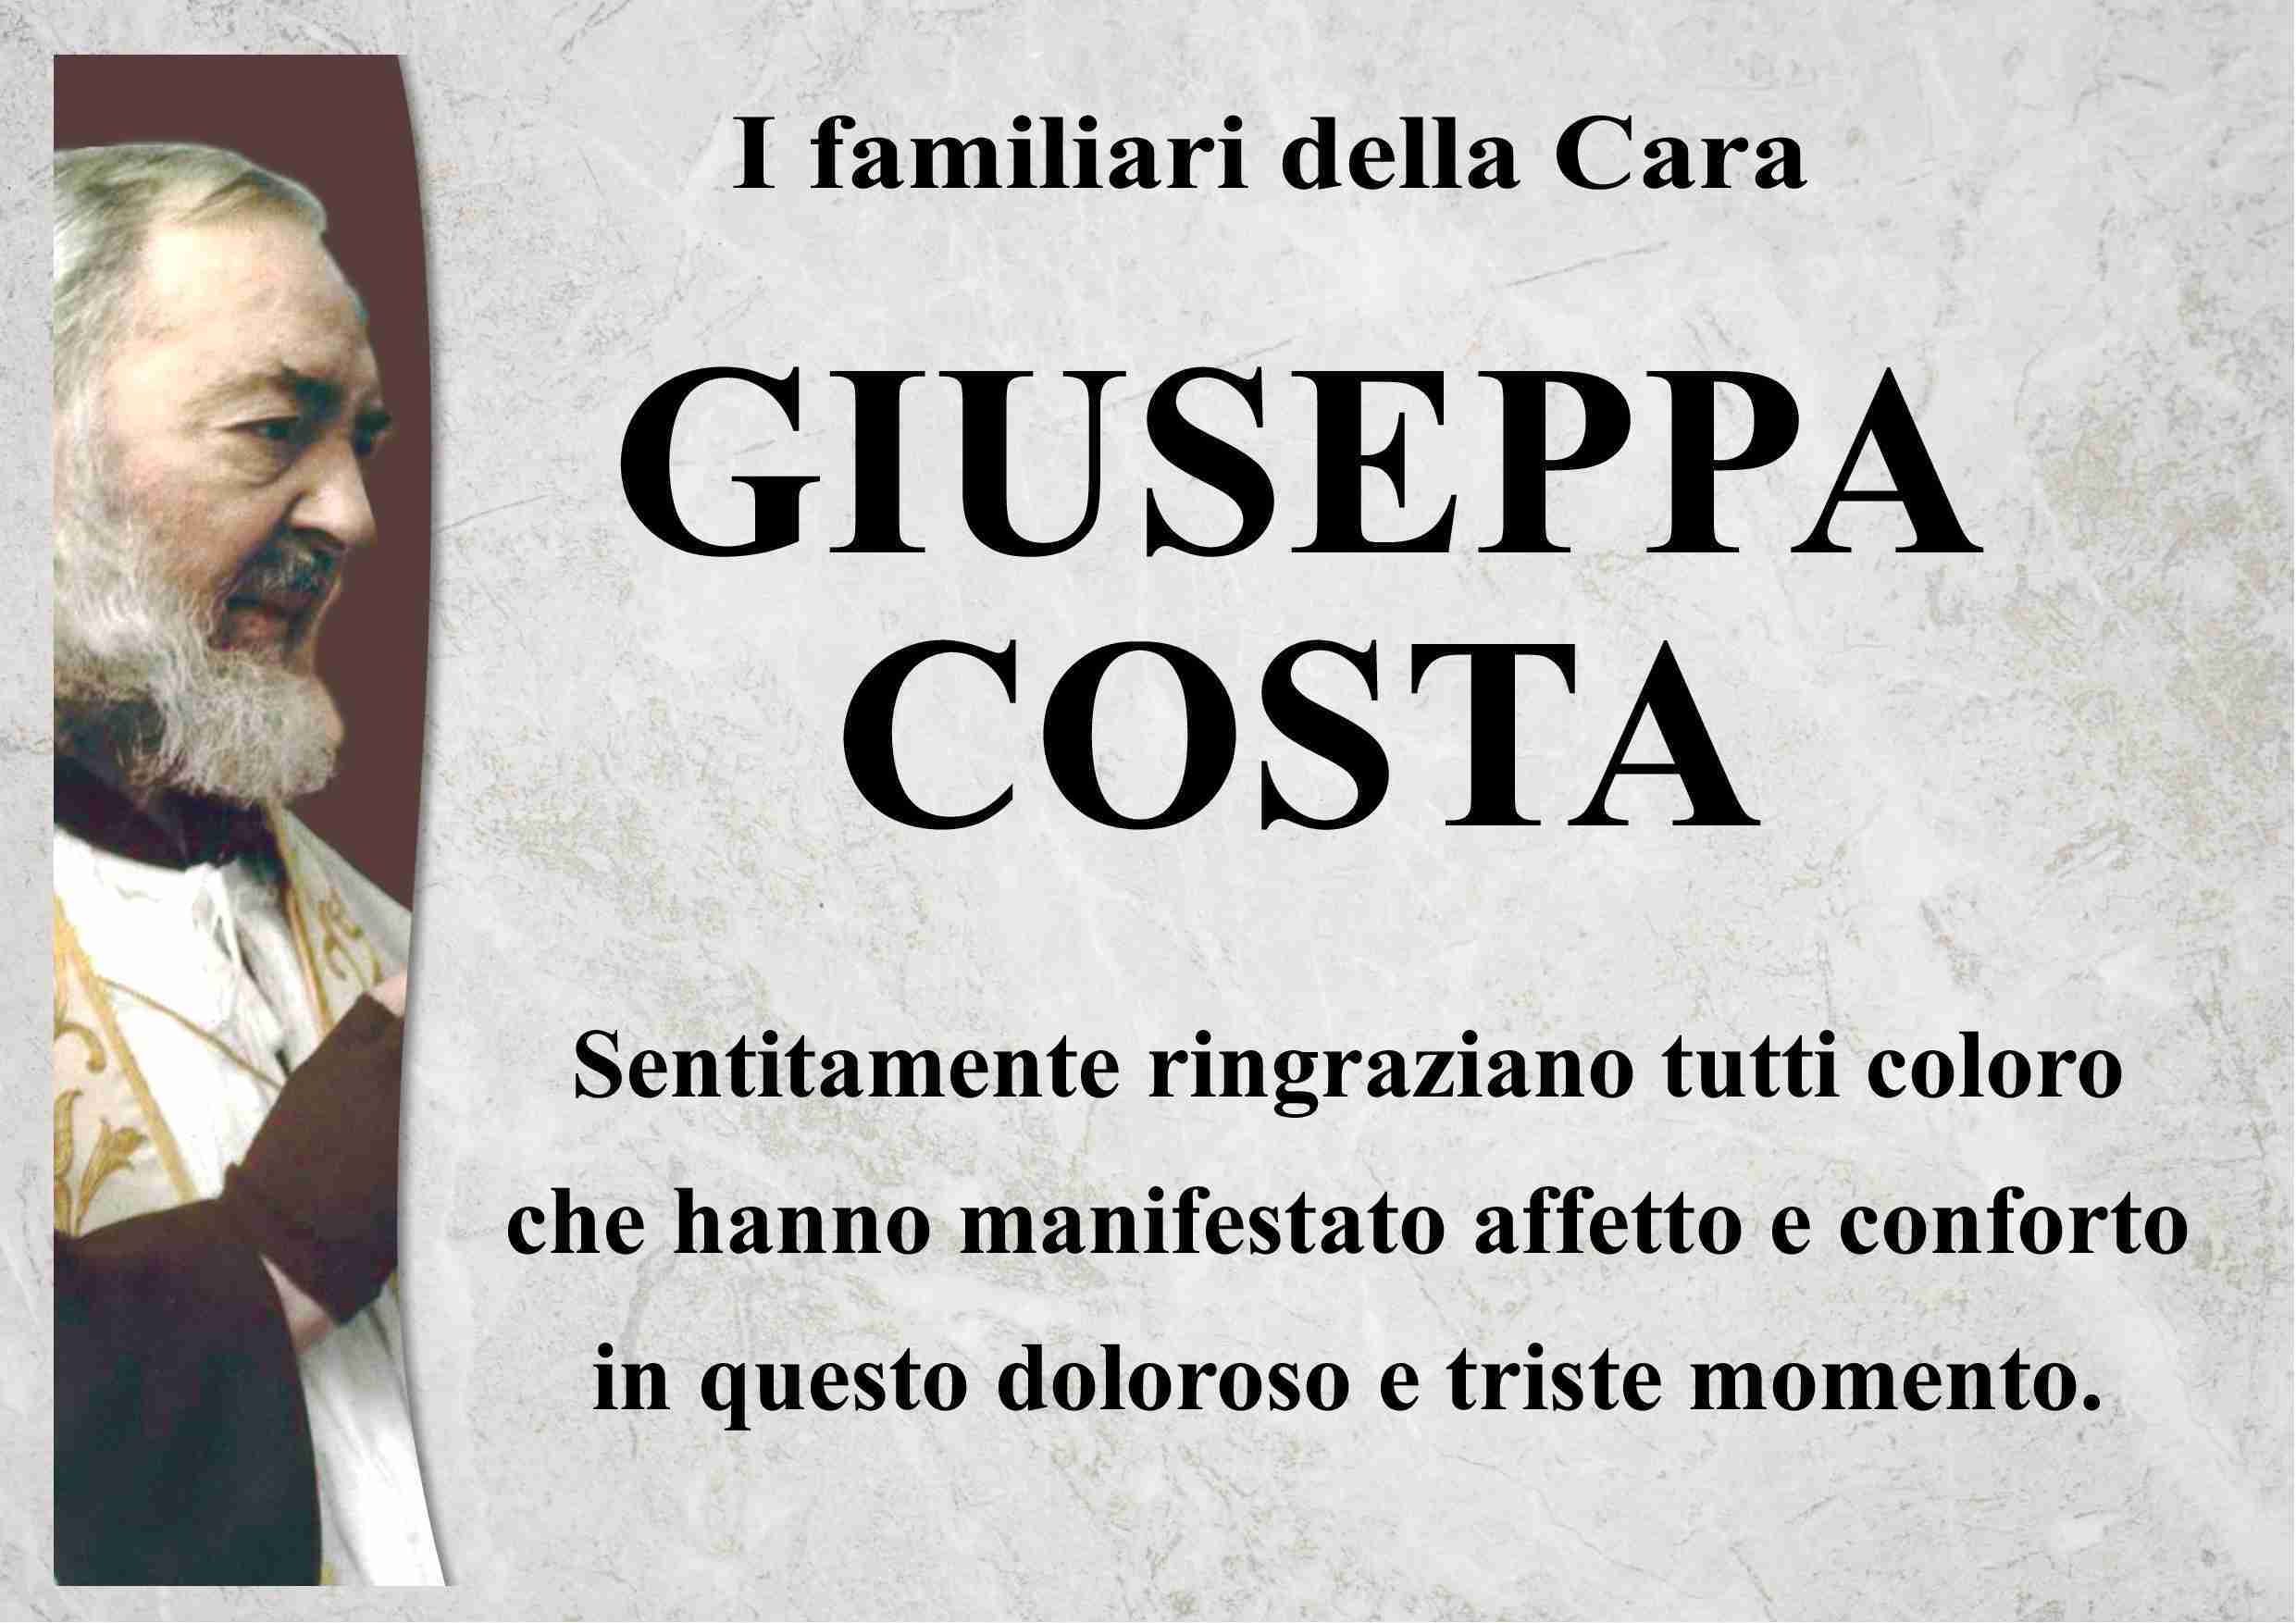 Giuseppa Costa